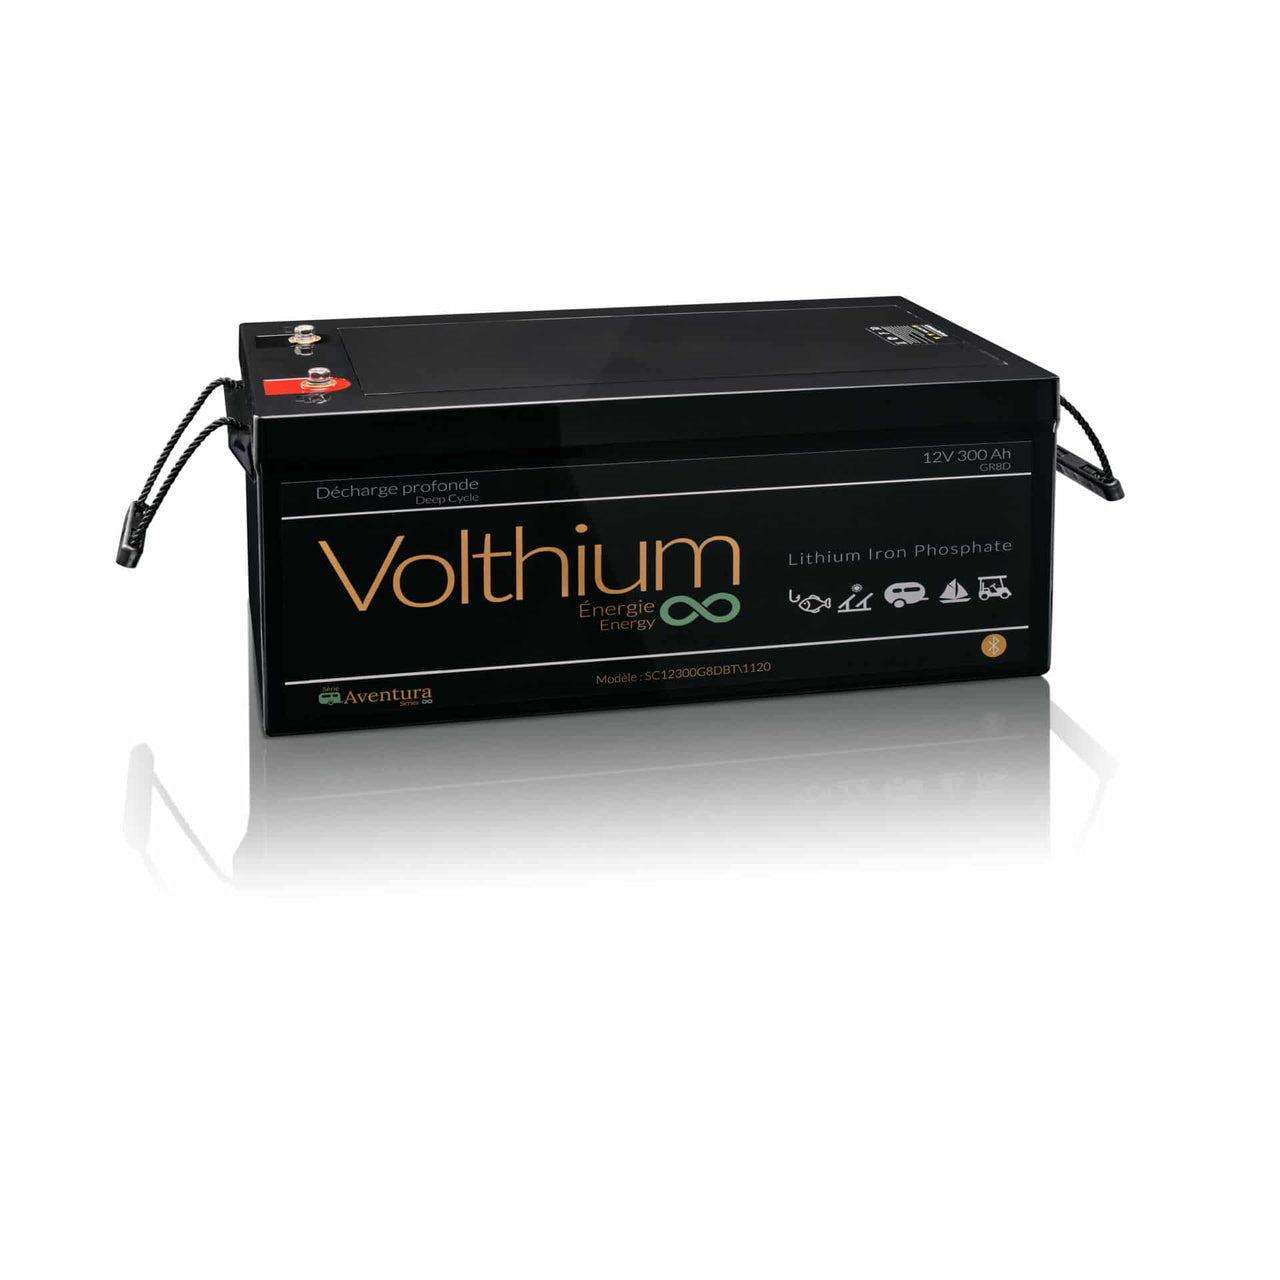 Volthium - Batterie Aventura 12V 300AH - Auto chauffante - 12.8-300-G8DY-CH2O